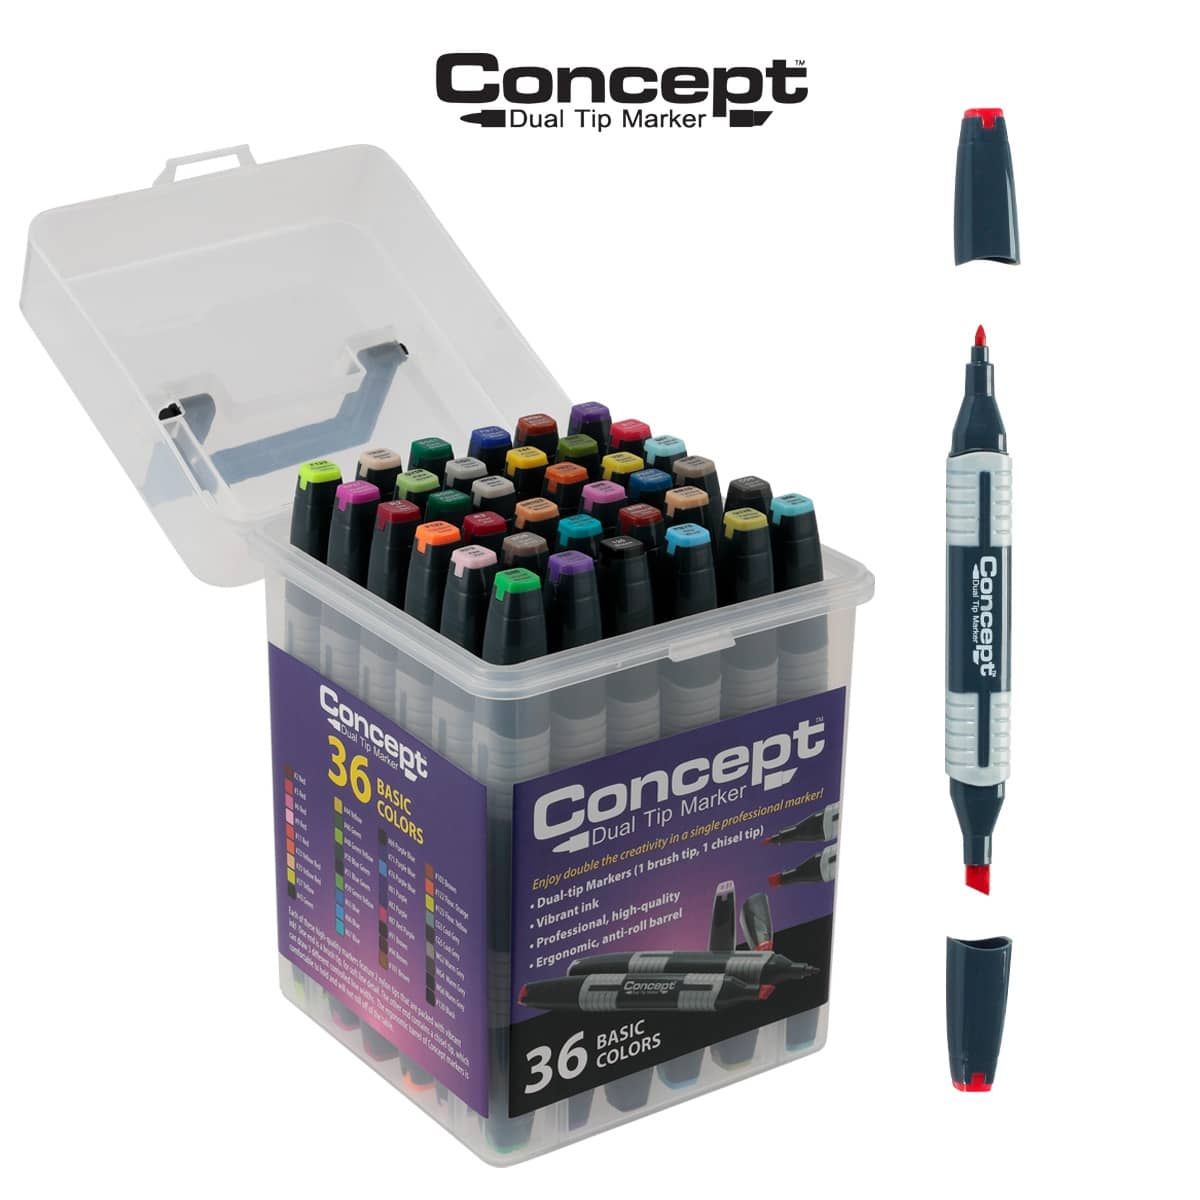 Concept Dual Tip Art Marker - Cool Grey CG2 (Box of 6)